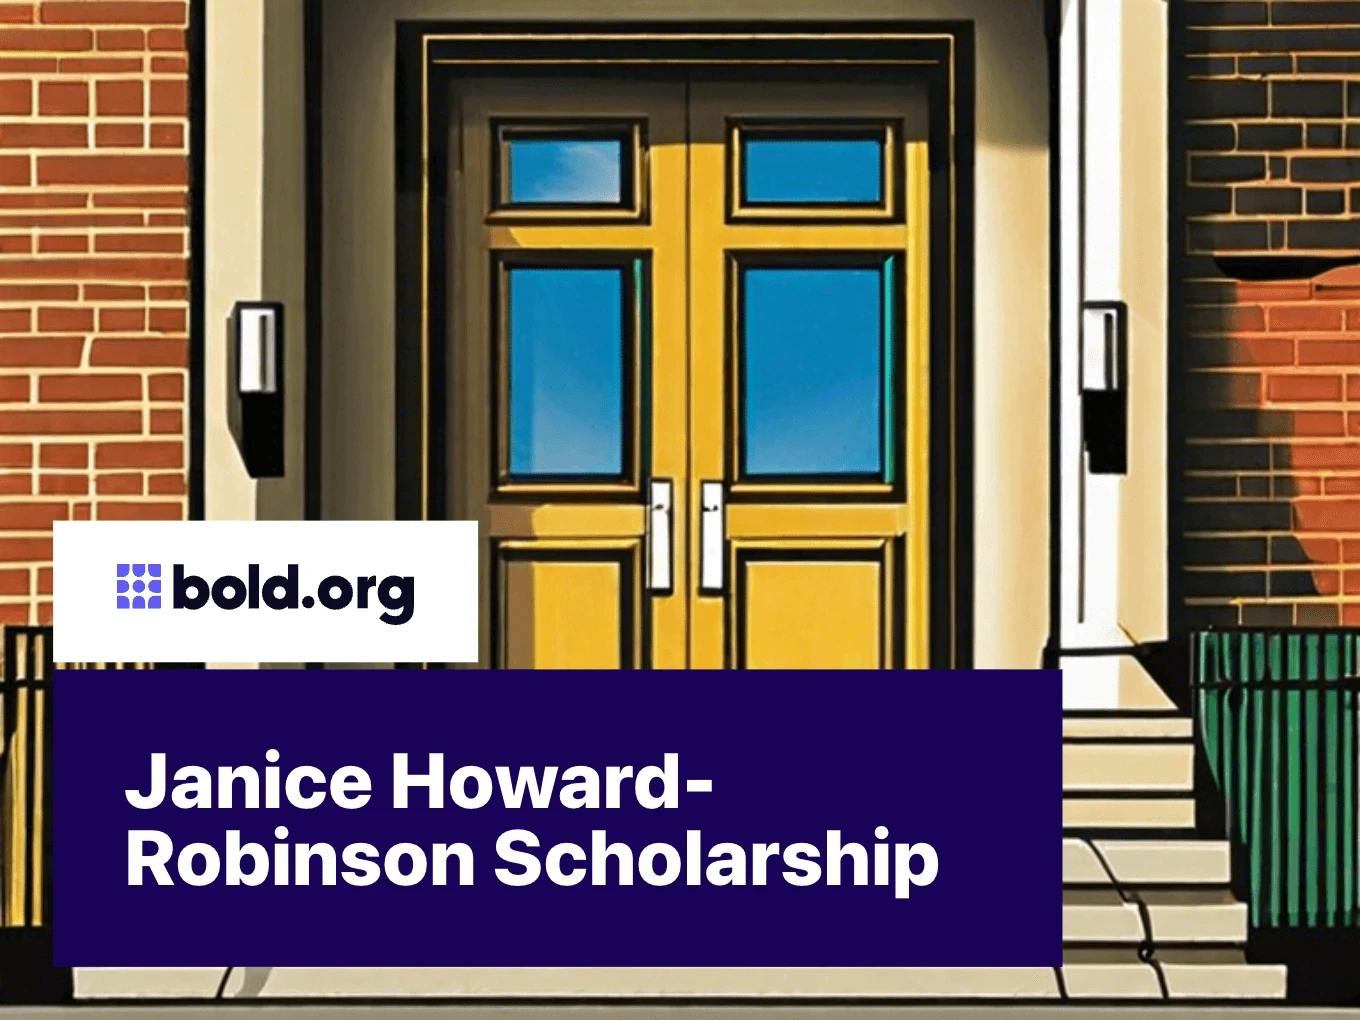 Janice Howard-Robinson Scholarship